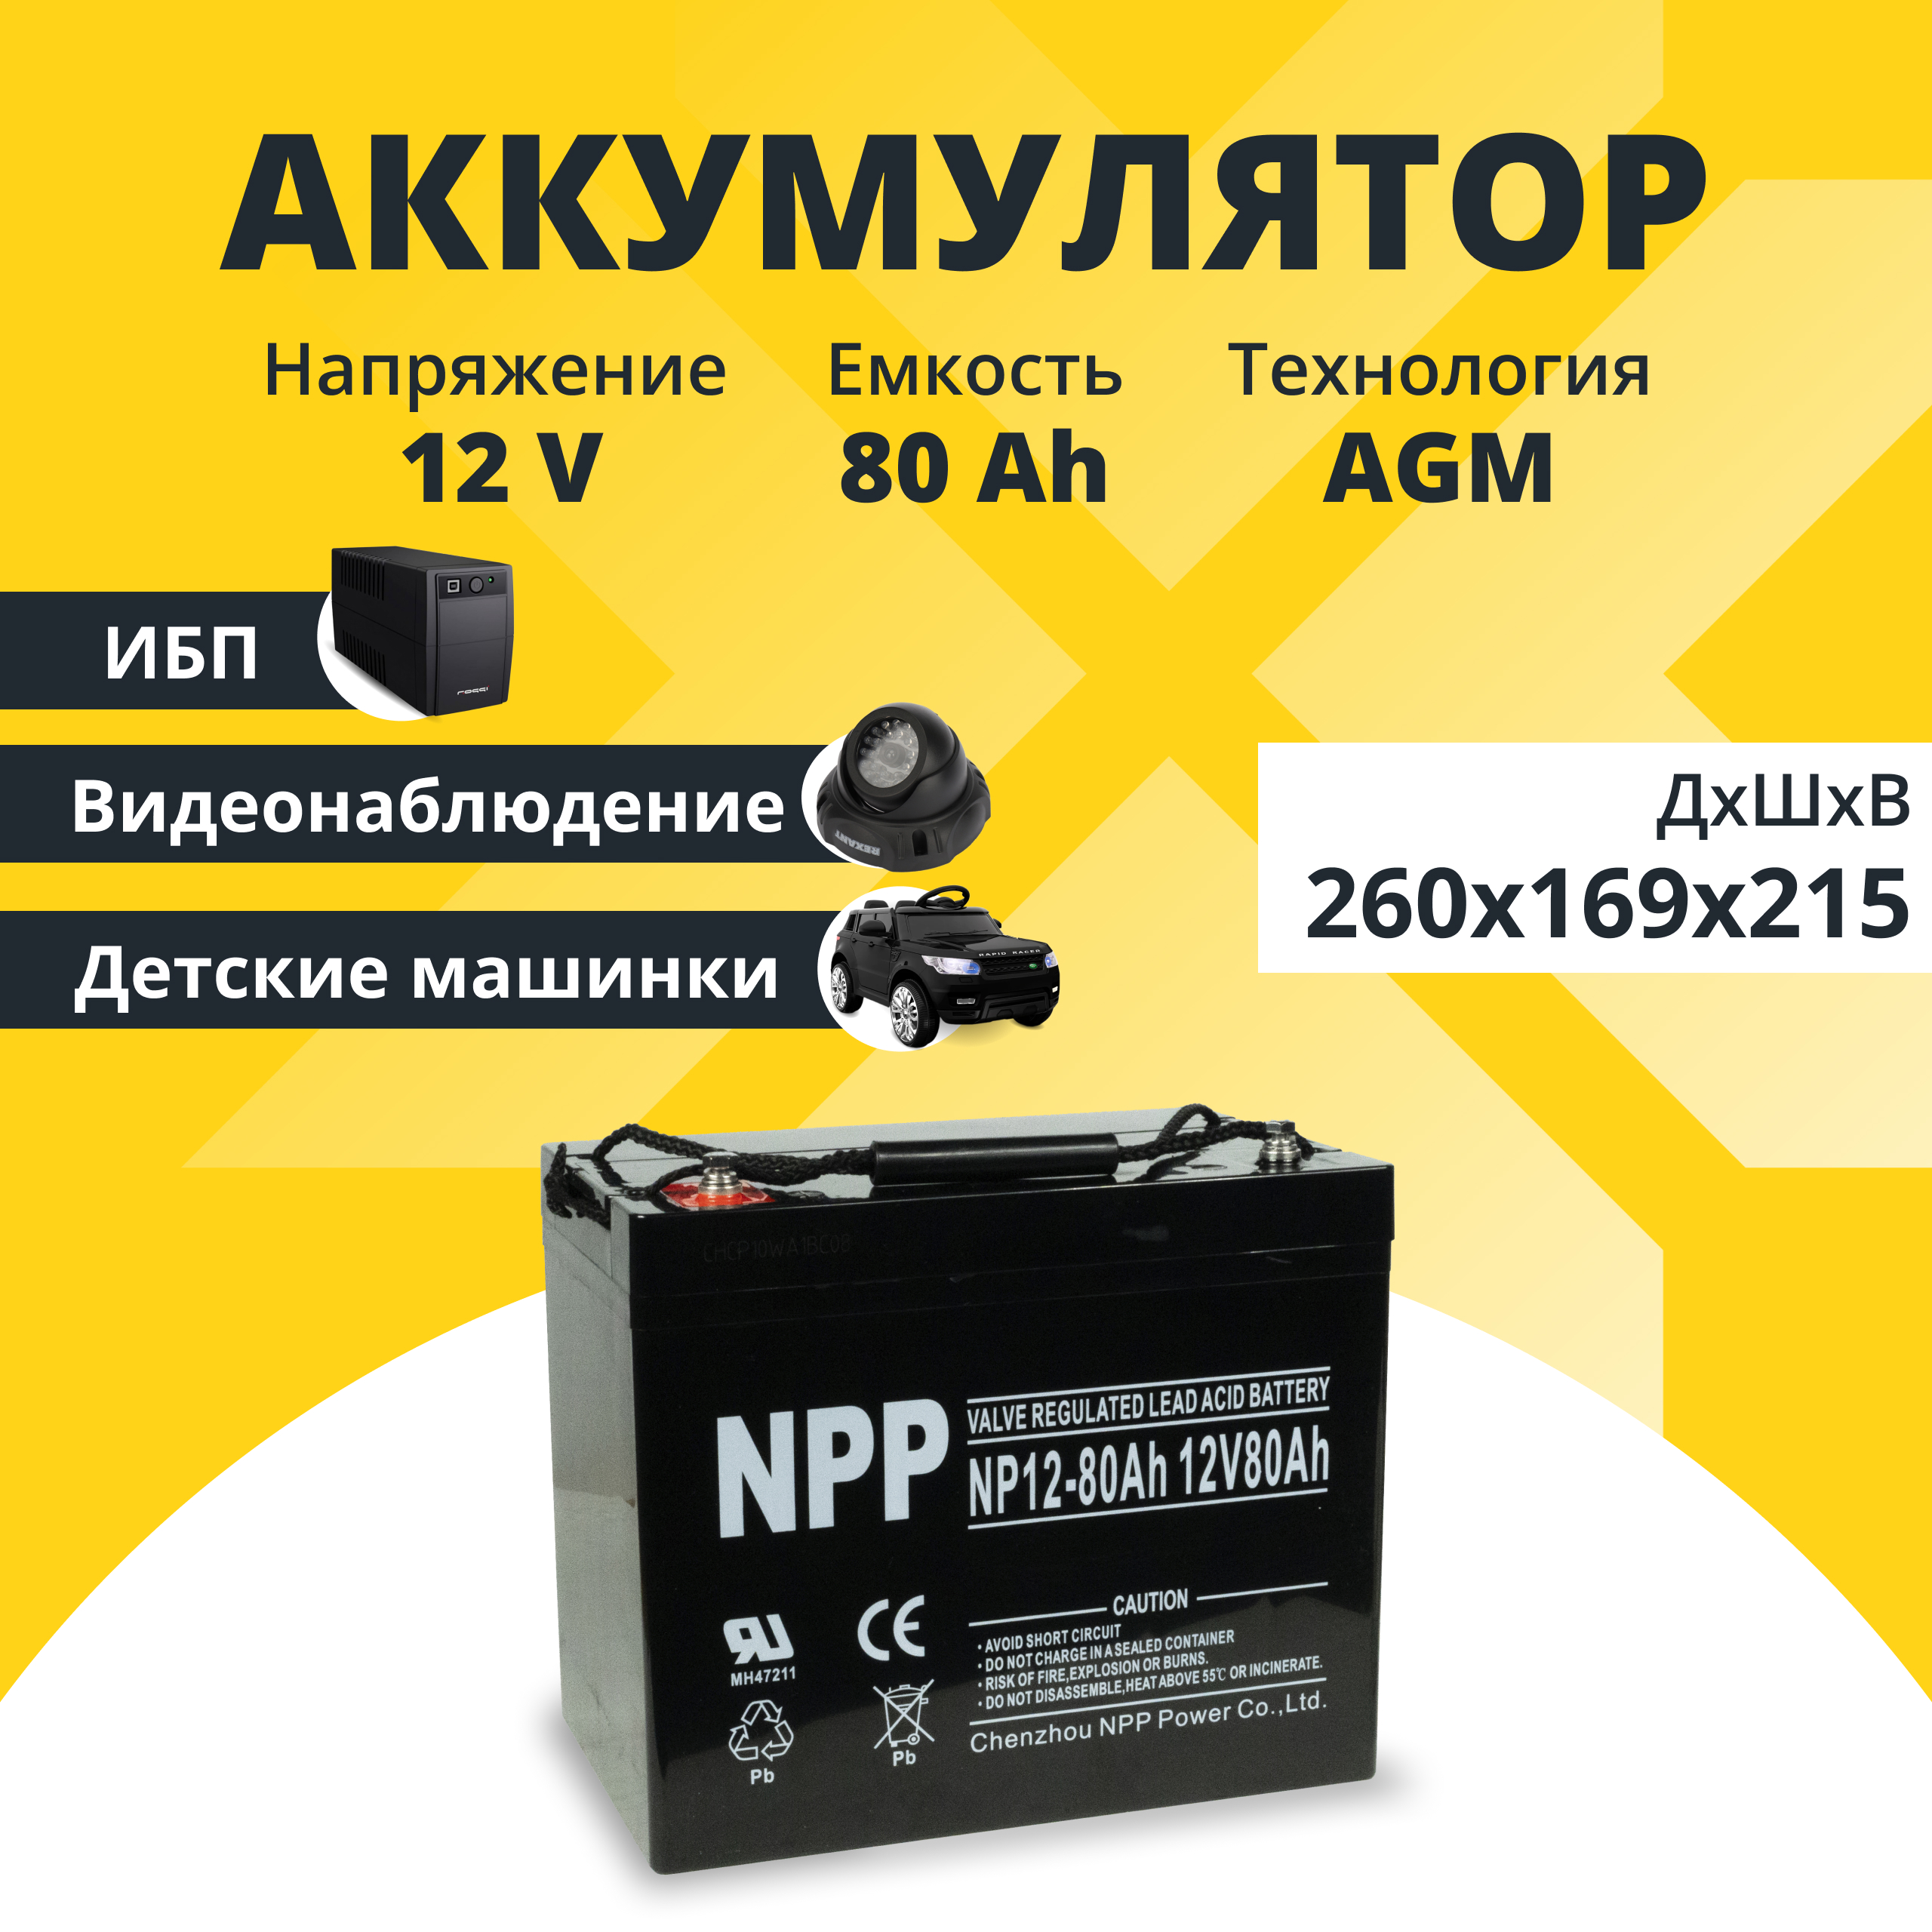 Аккумулятор для ибп NPP 12v 80Ah M6/T14 NP12-80Ah